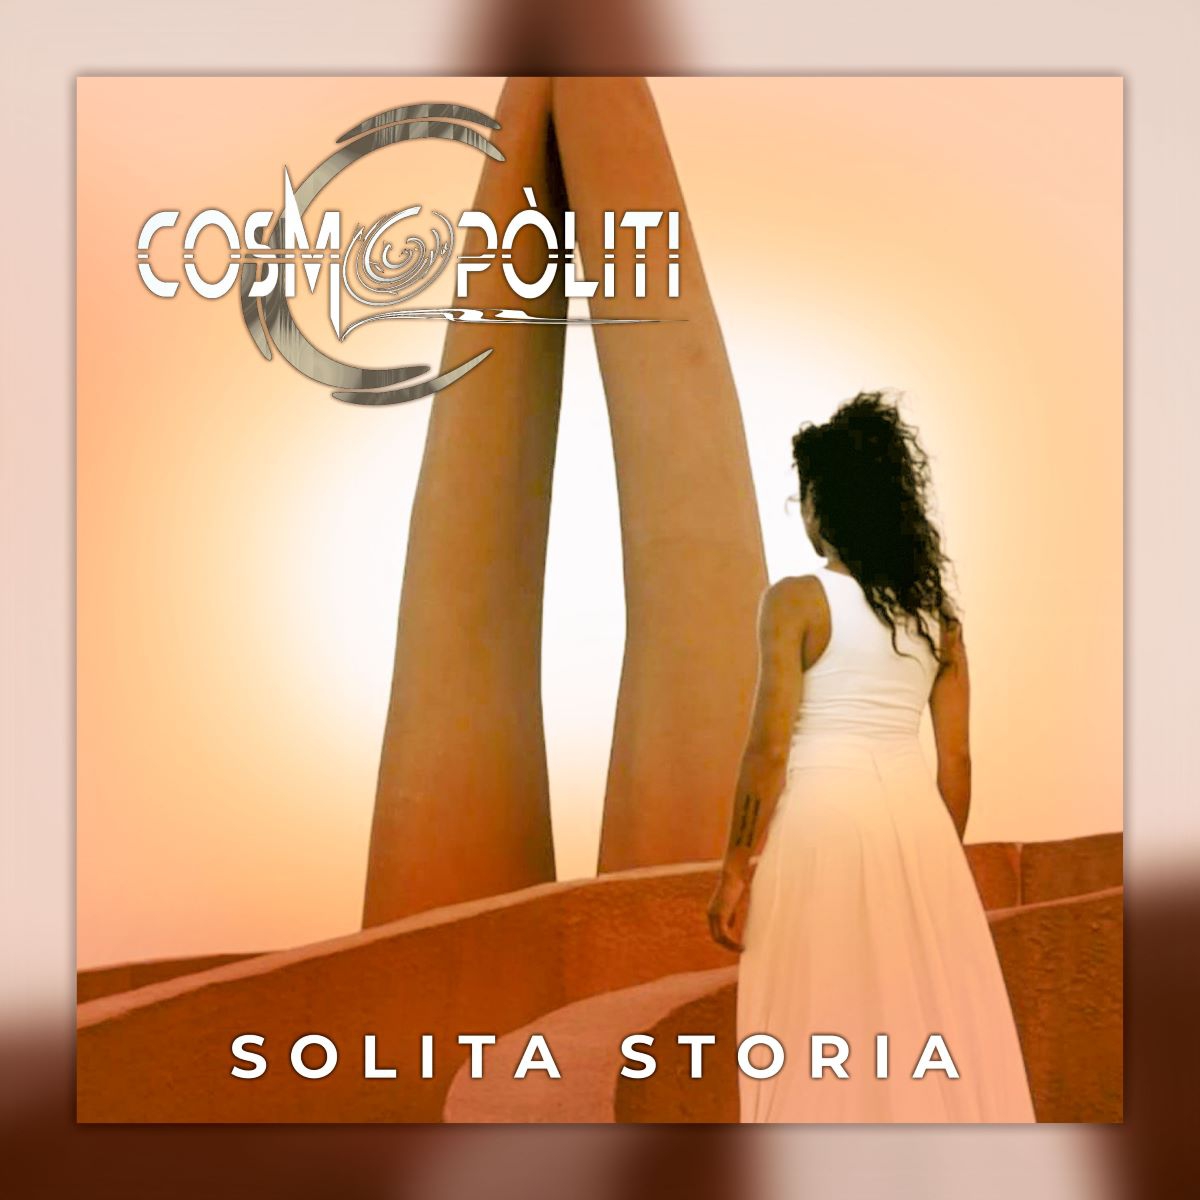 Cosmopòliti - “Solita Storia”